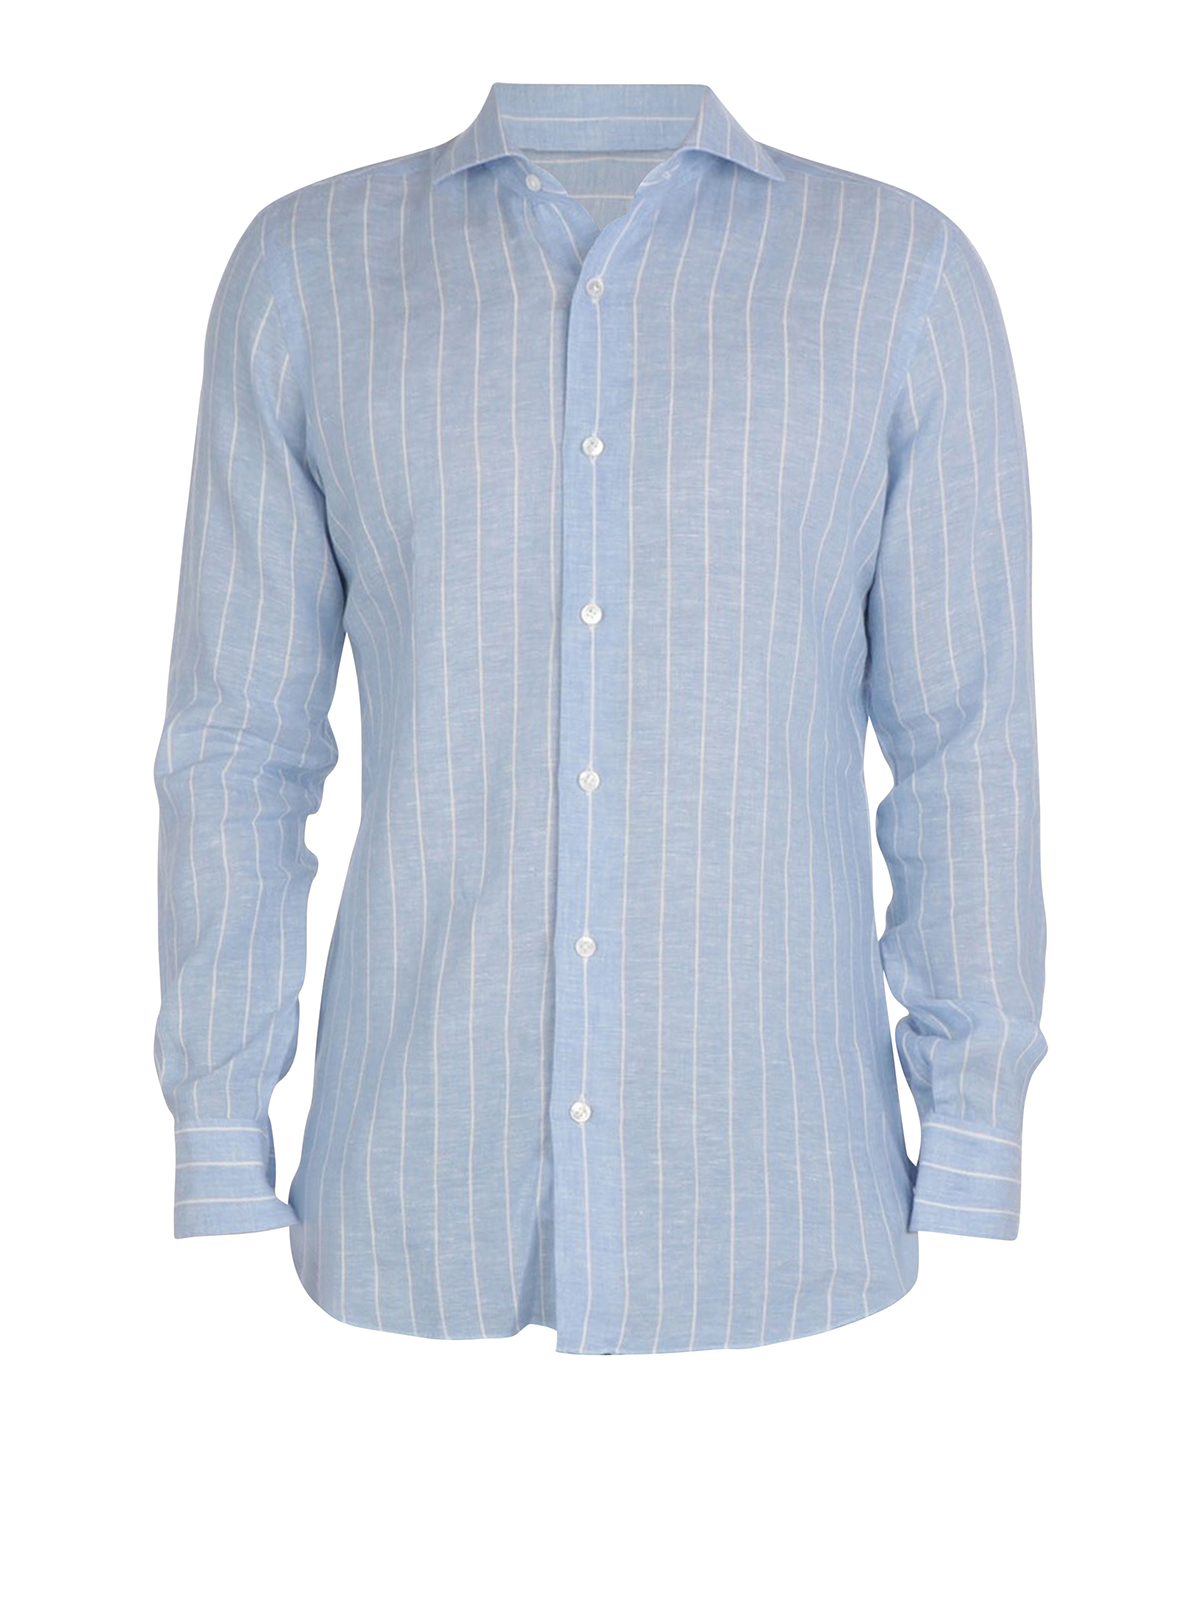 Shirts Barba - Culto linen striped shirt - BARBA622901 | iKRIX.com